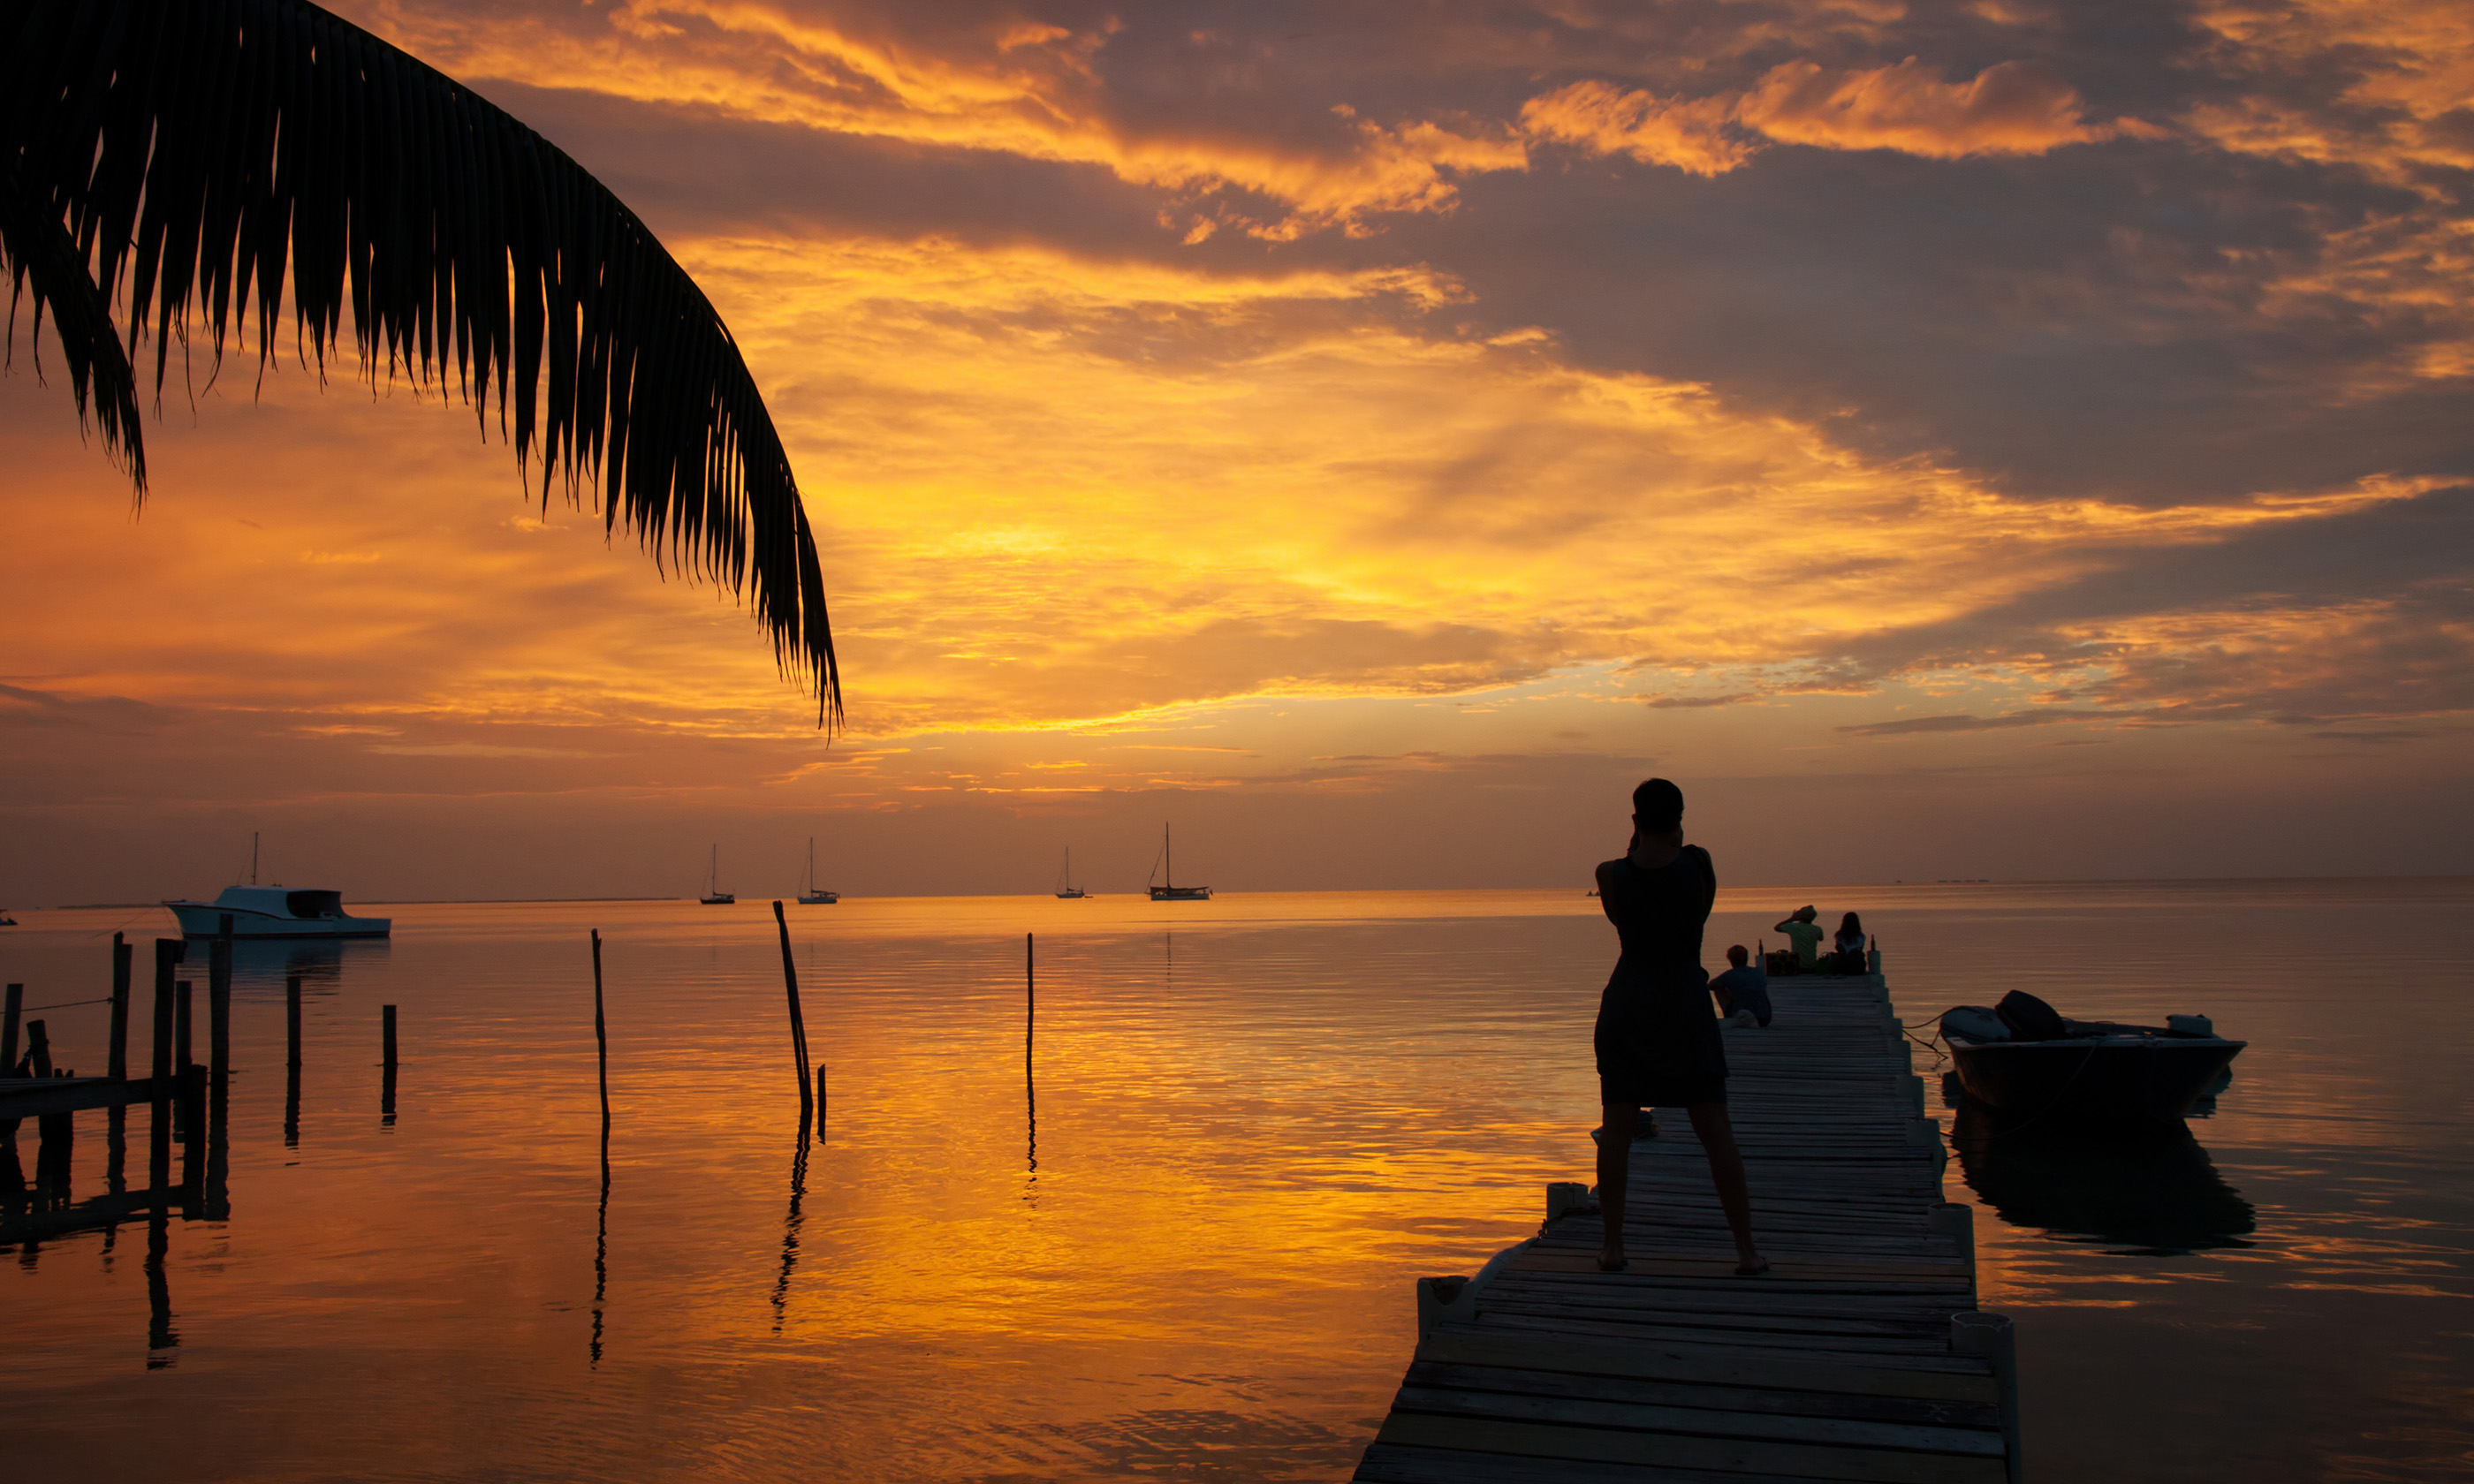 Sunset on Caye Caulker, Belize (Shutterstock.com)